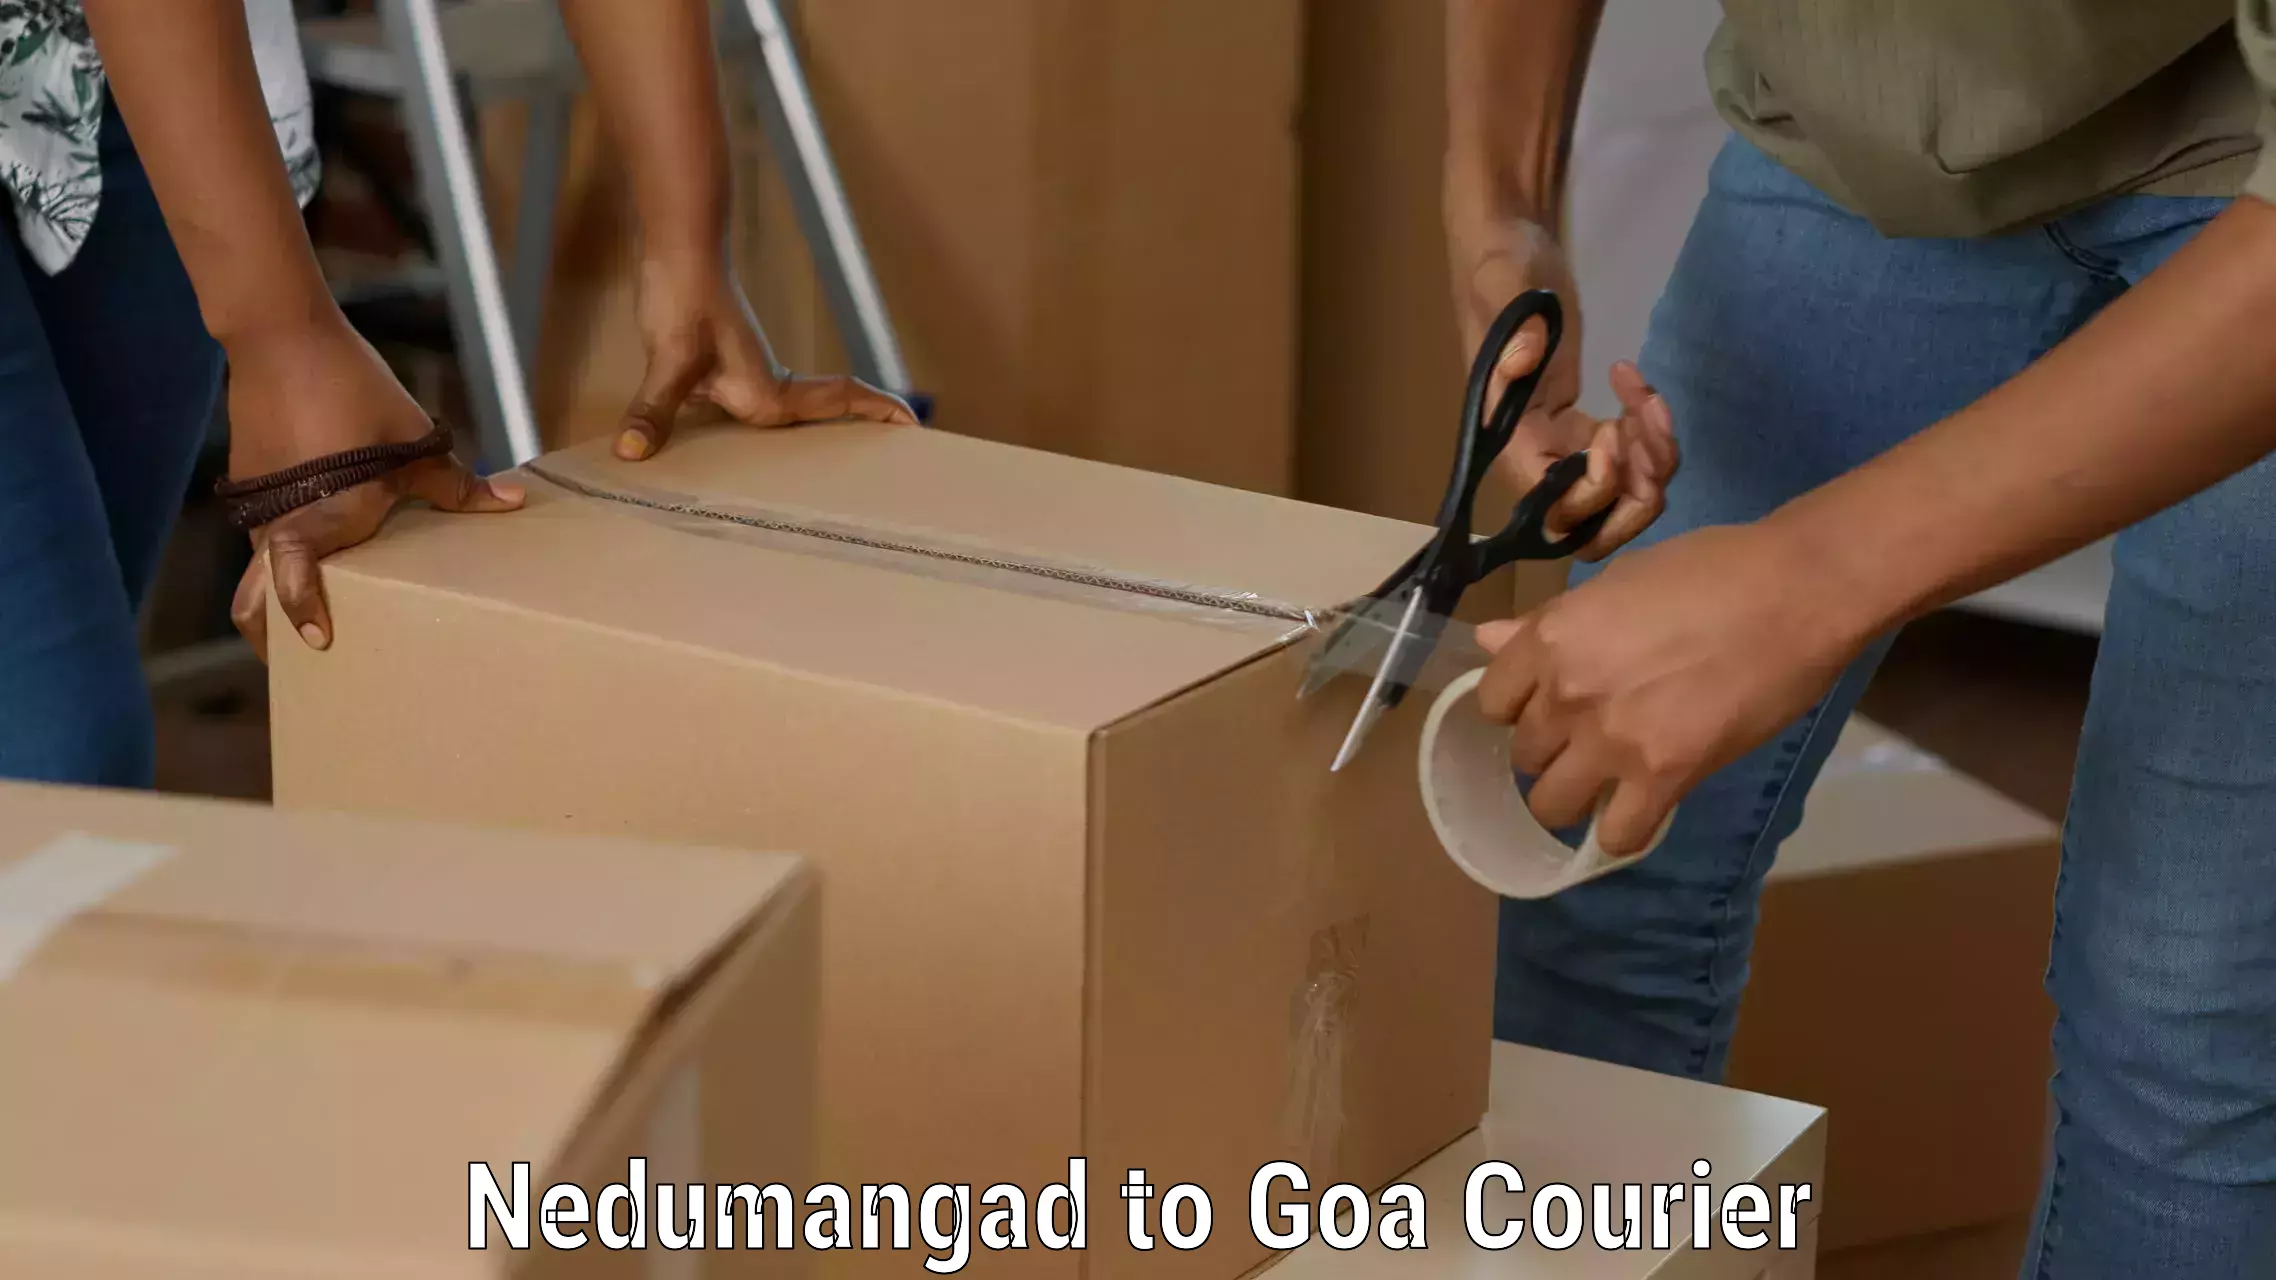 Global delivery options Nedumangad to Panaji